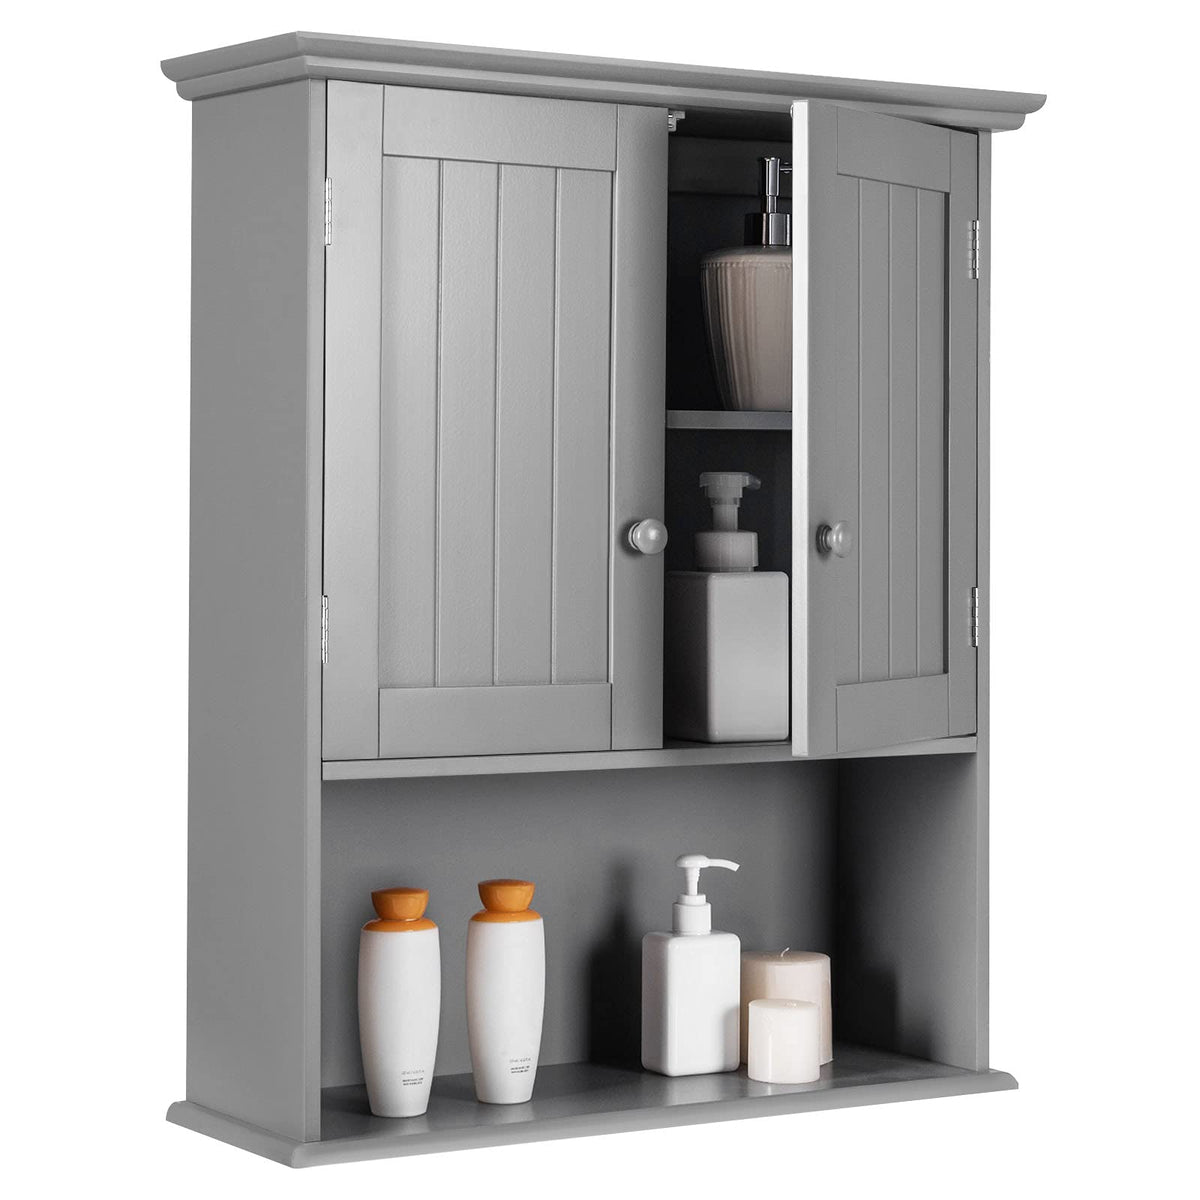 Bathroom Wall Cabinet, Wall Mounted Wooden Kitchen Cupboard Storage Cabinet, w/2 Doors & 2-Tier Adjustable Shelves (Gray)